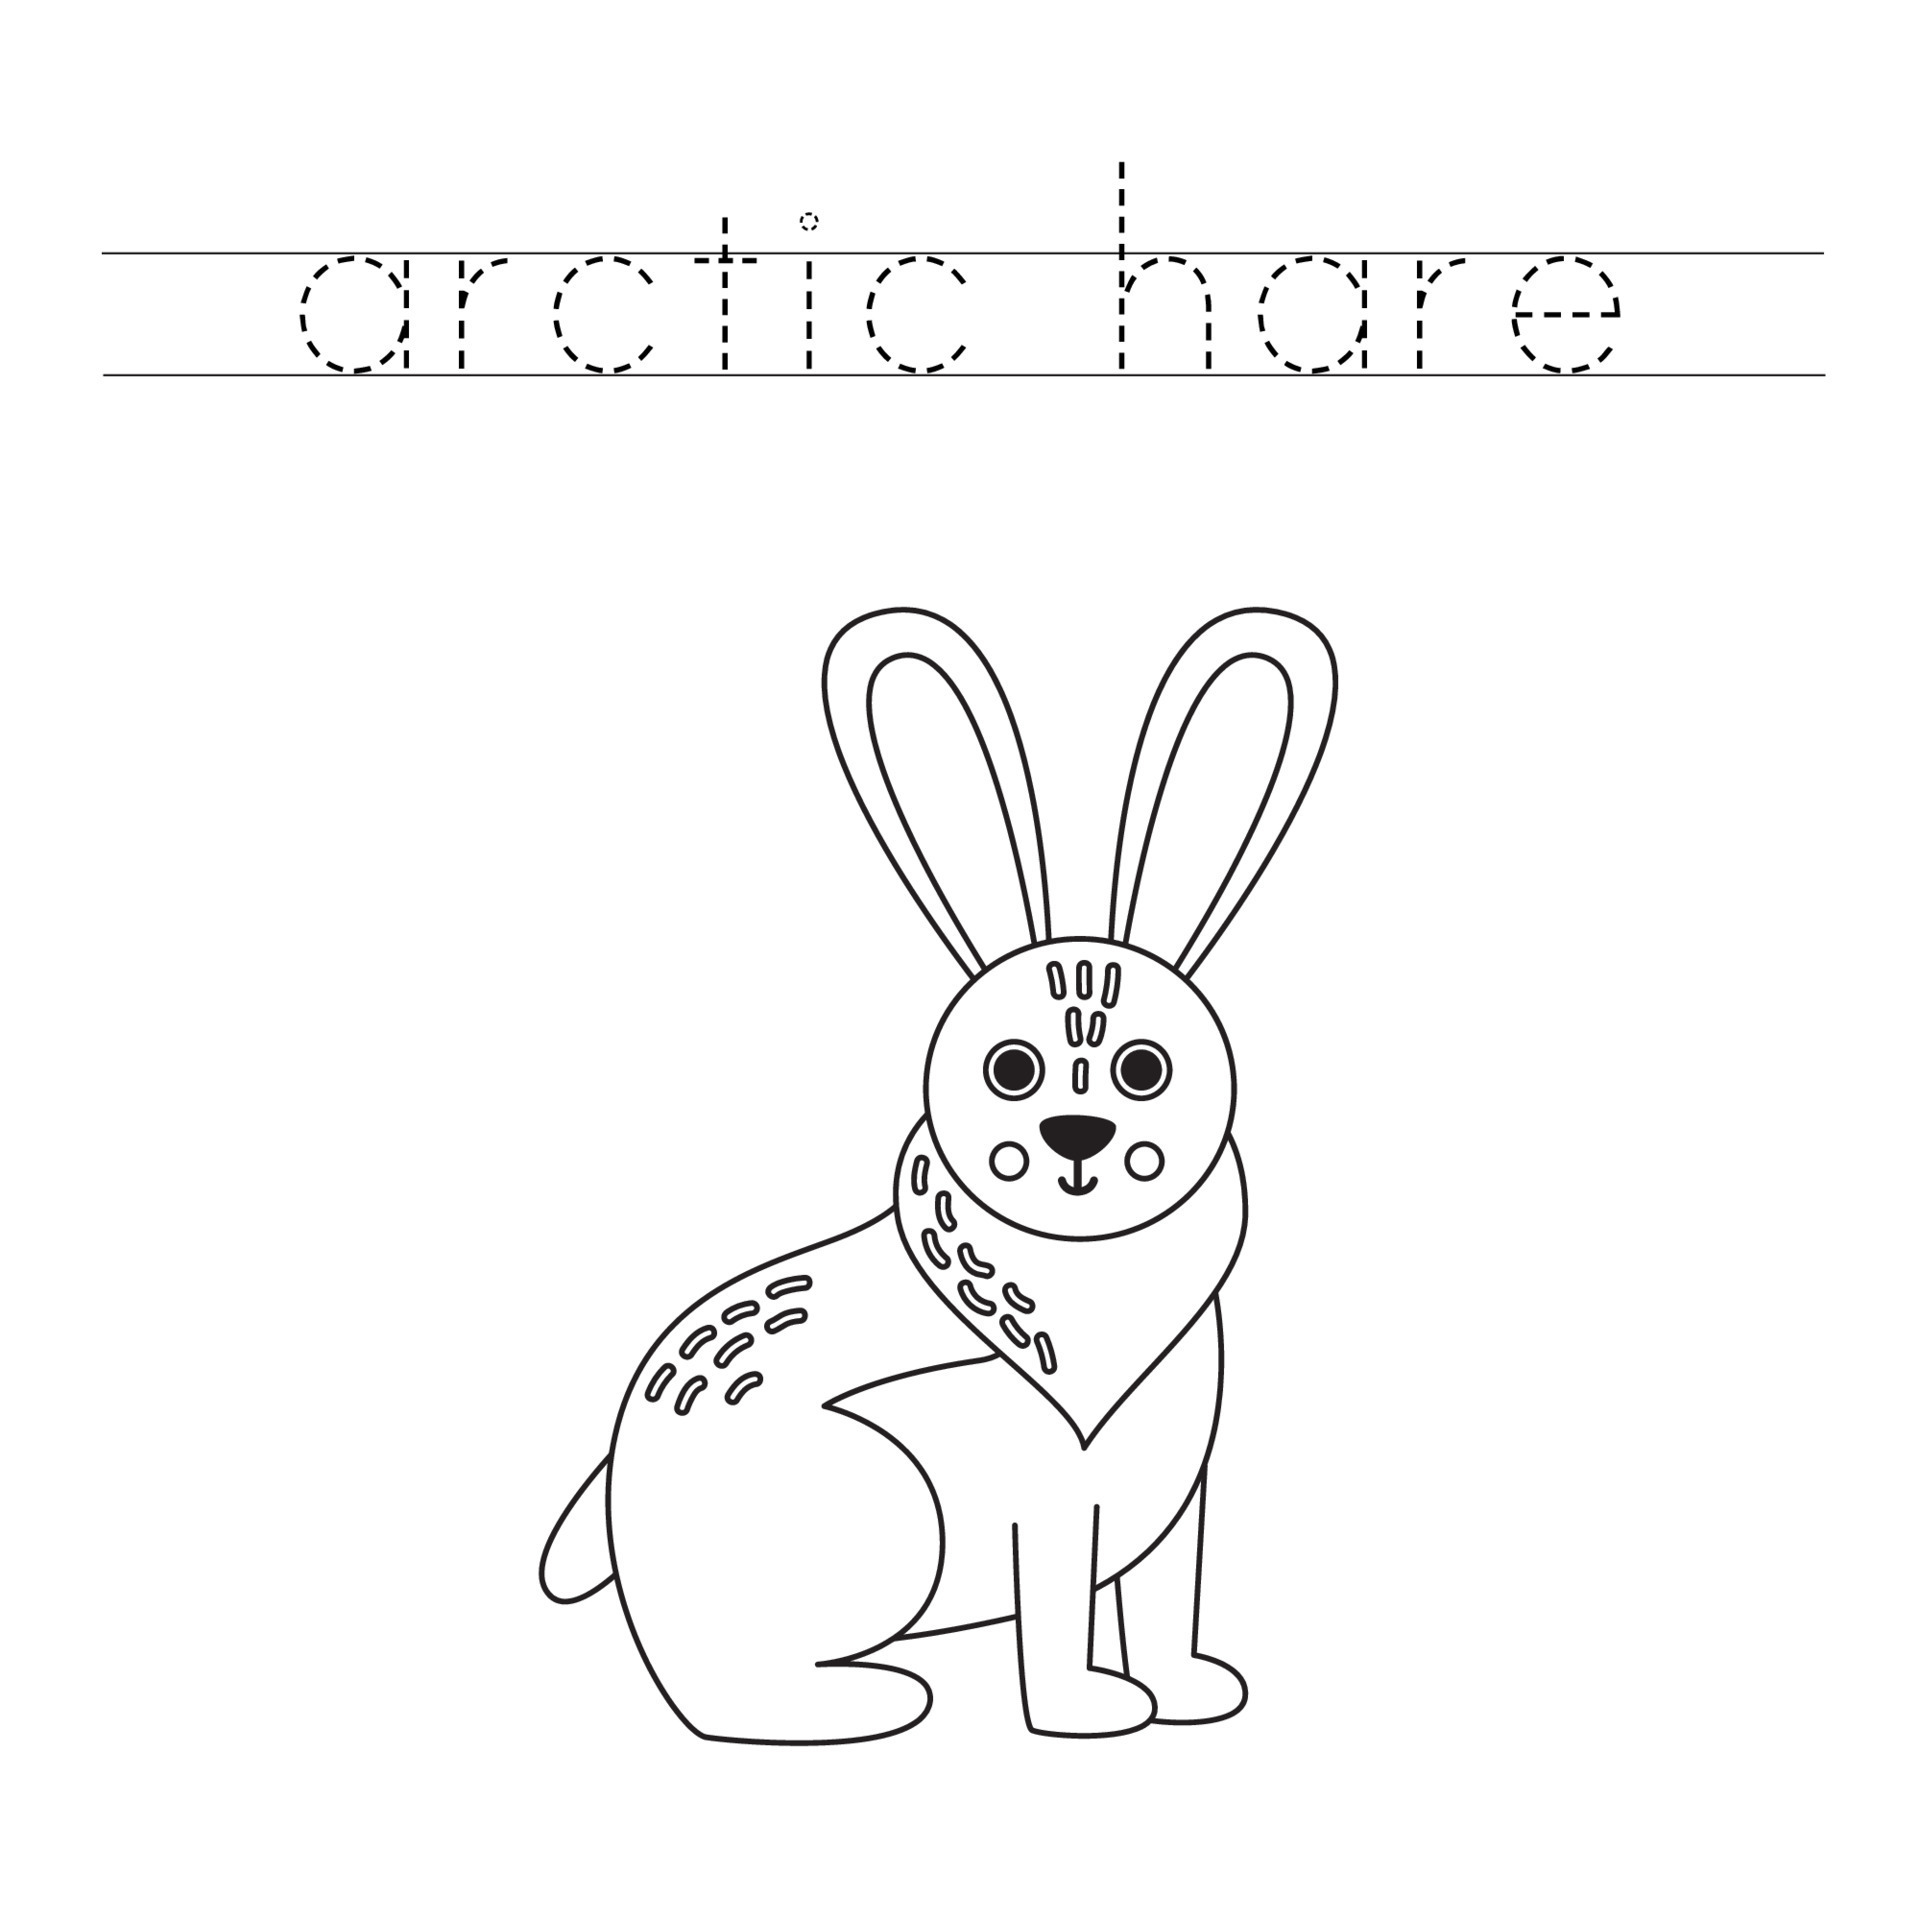 arctic hare cartoon